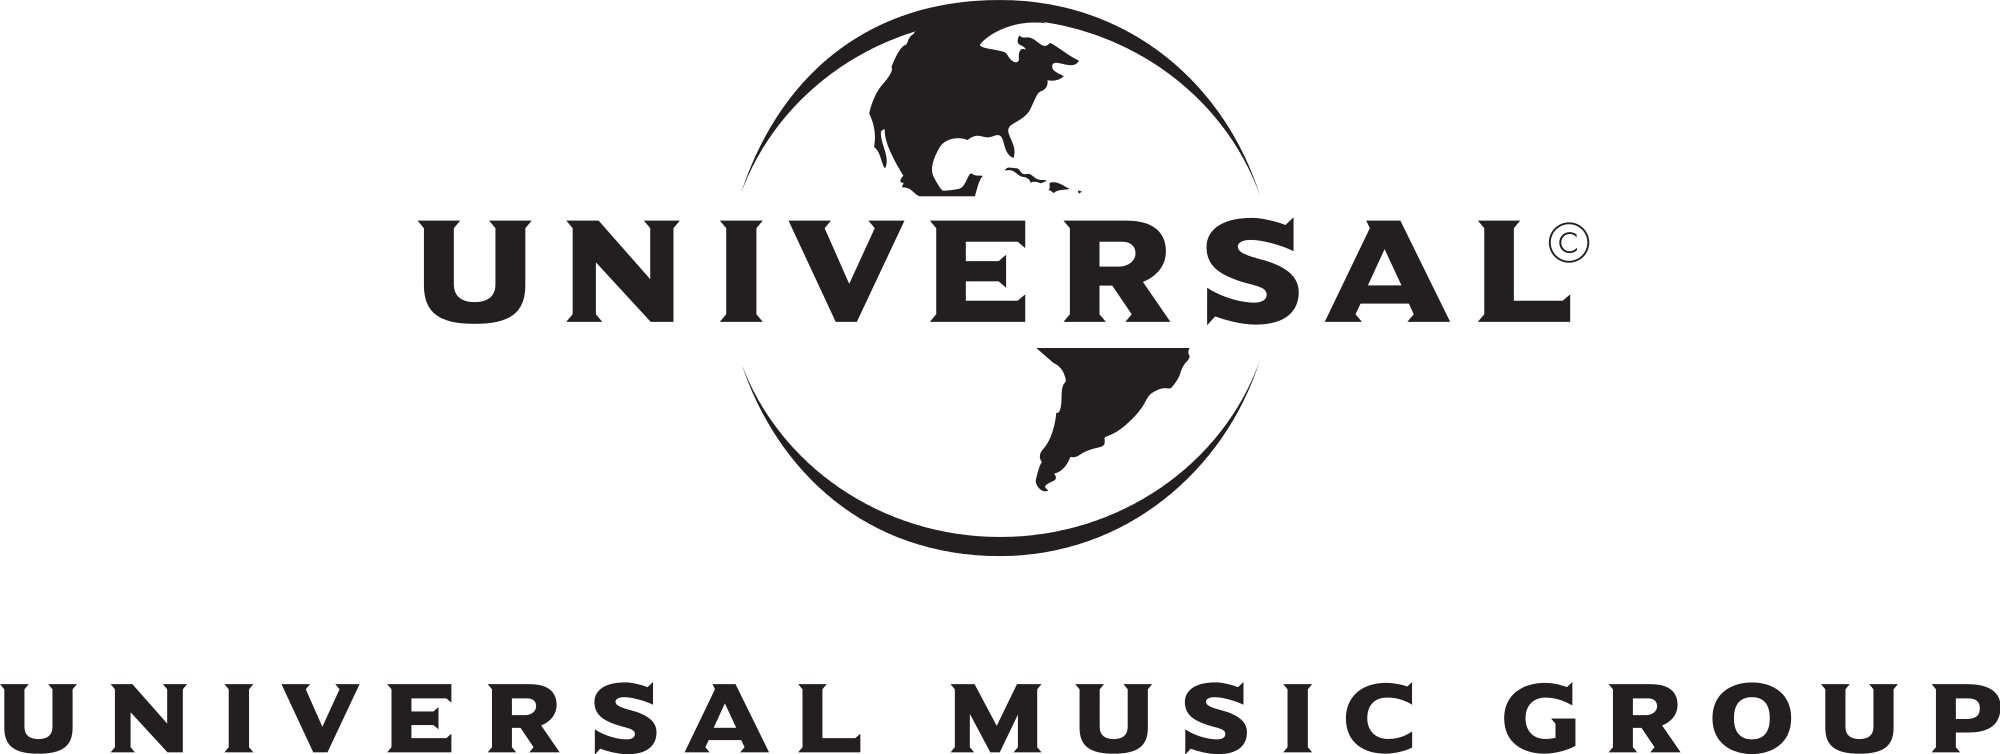 universal-music-group-logo